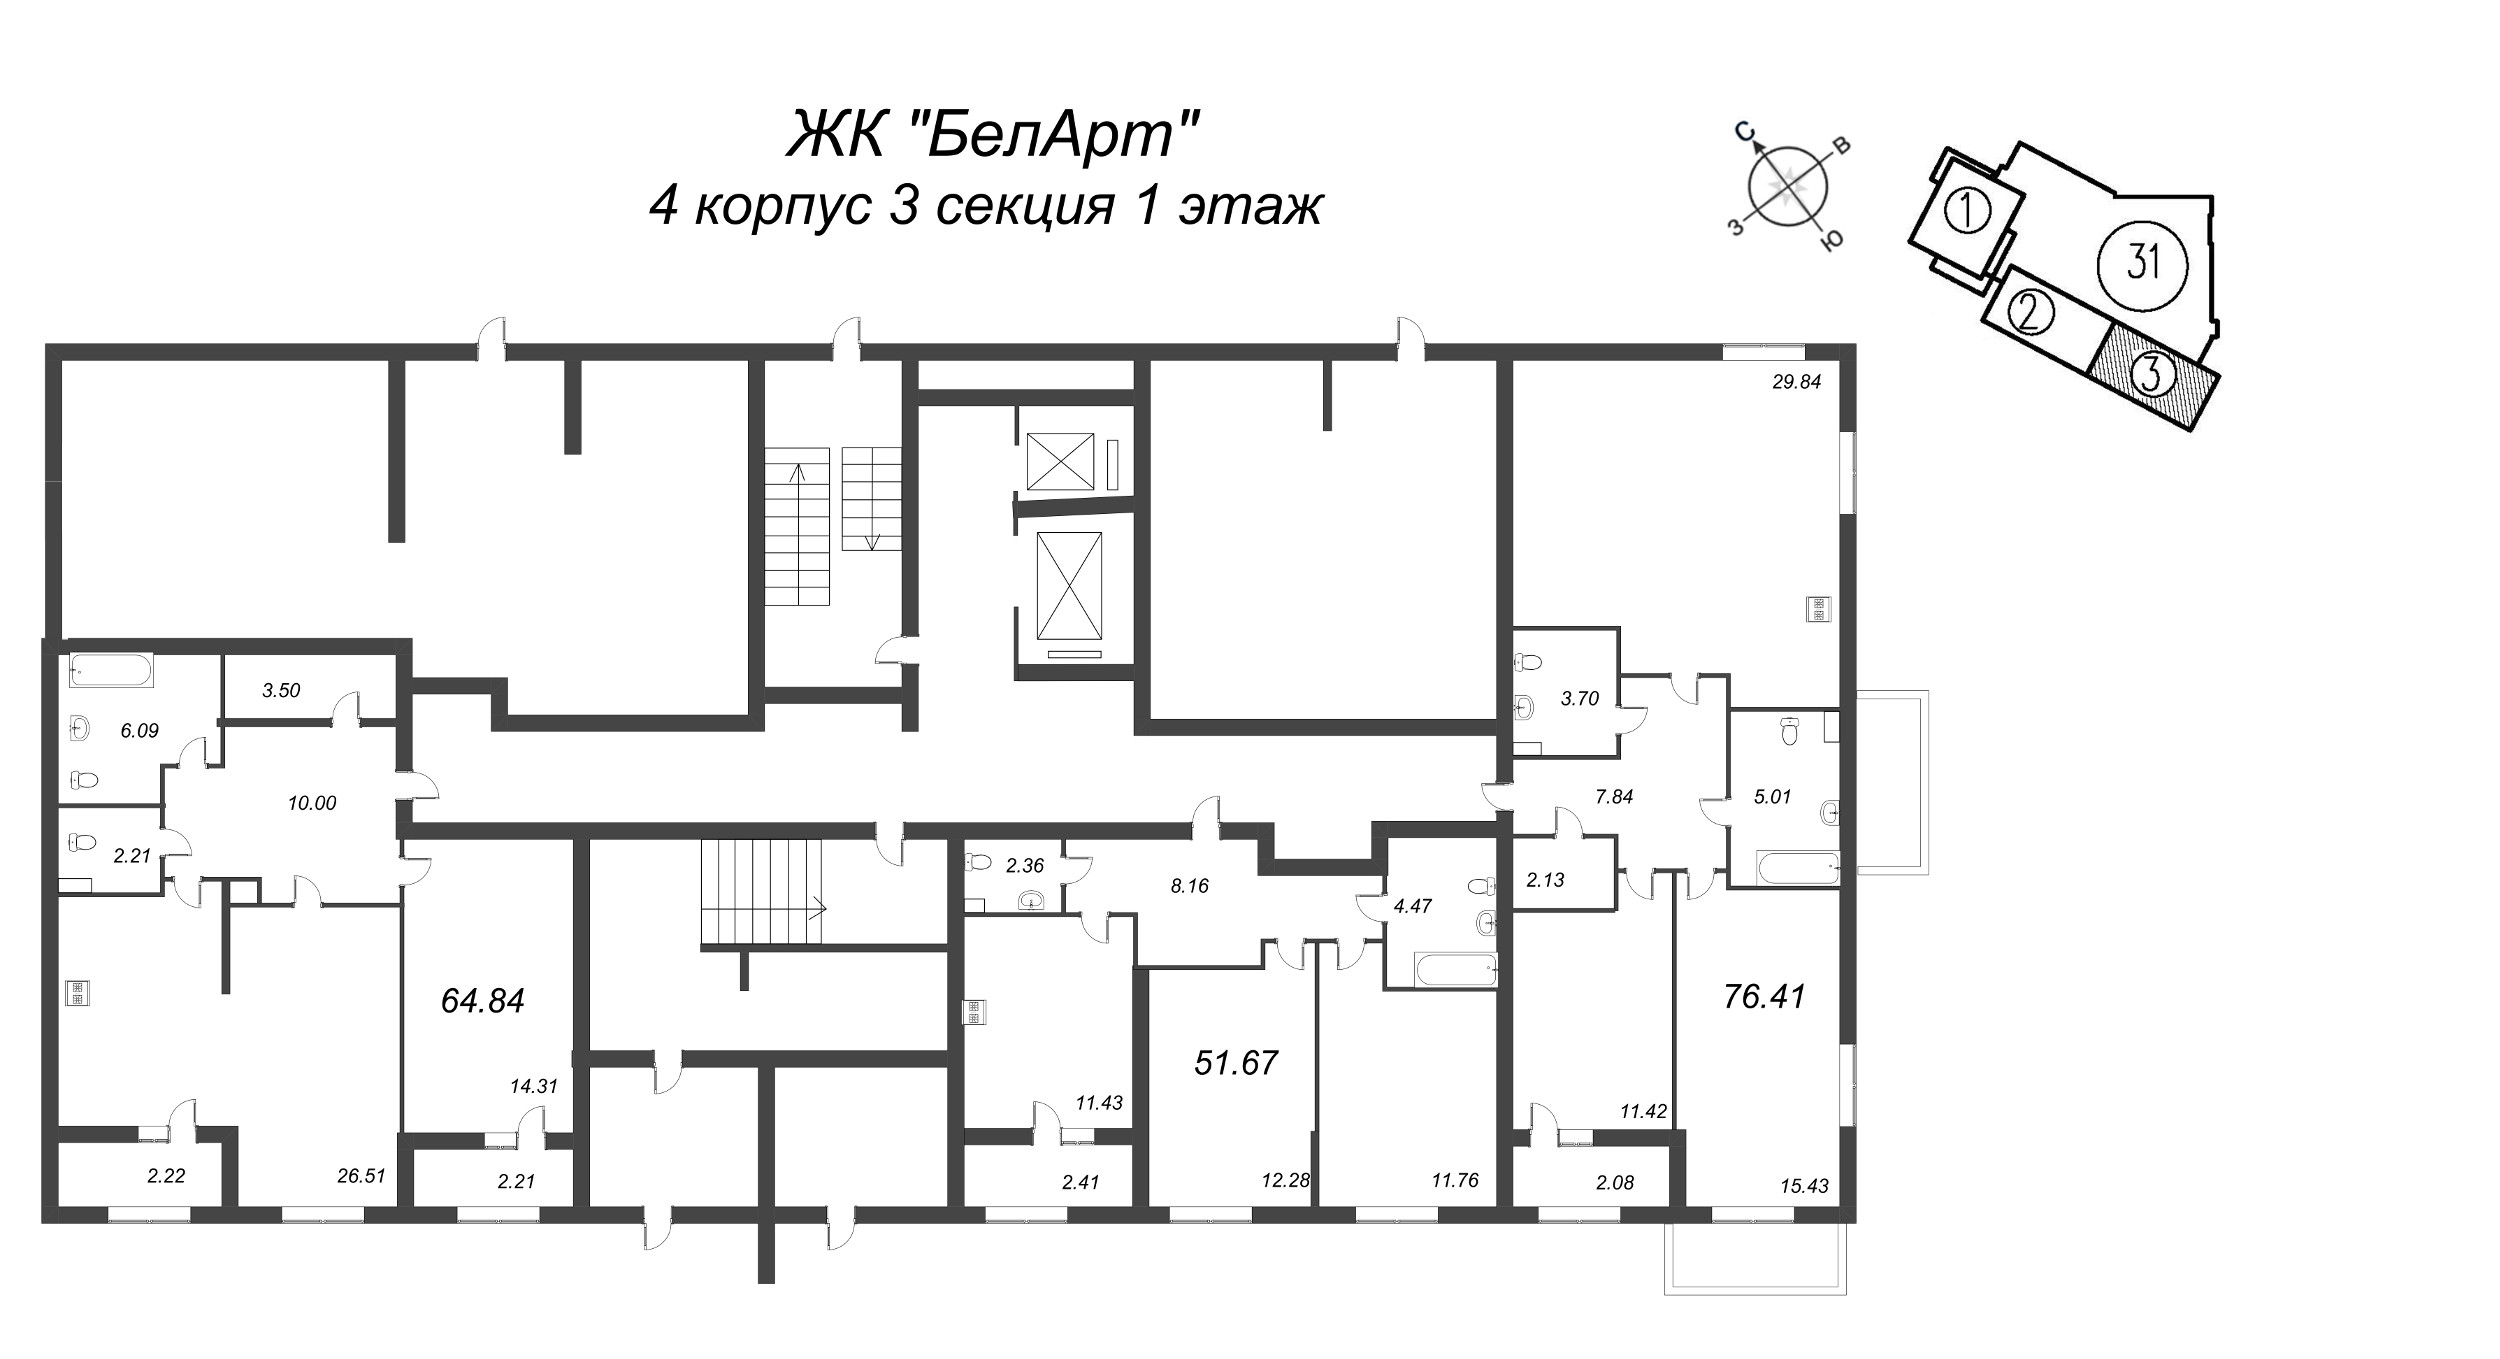 3-комнатная (Евро) квартира, 76.41 м² - планировка этажа